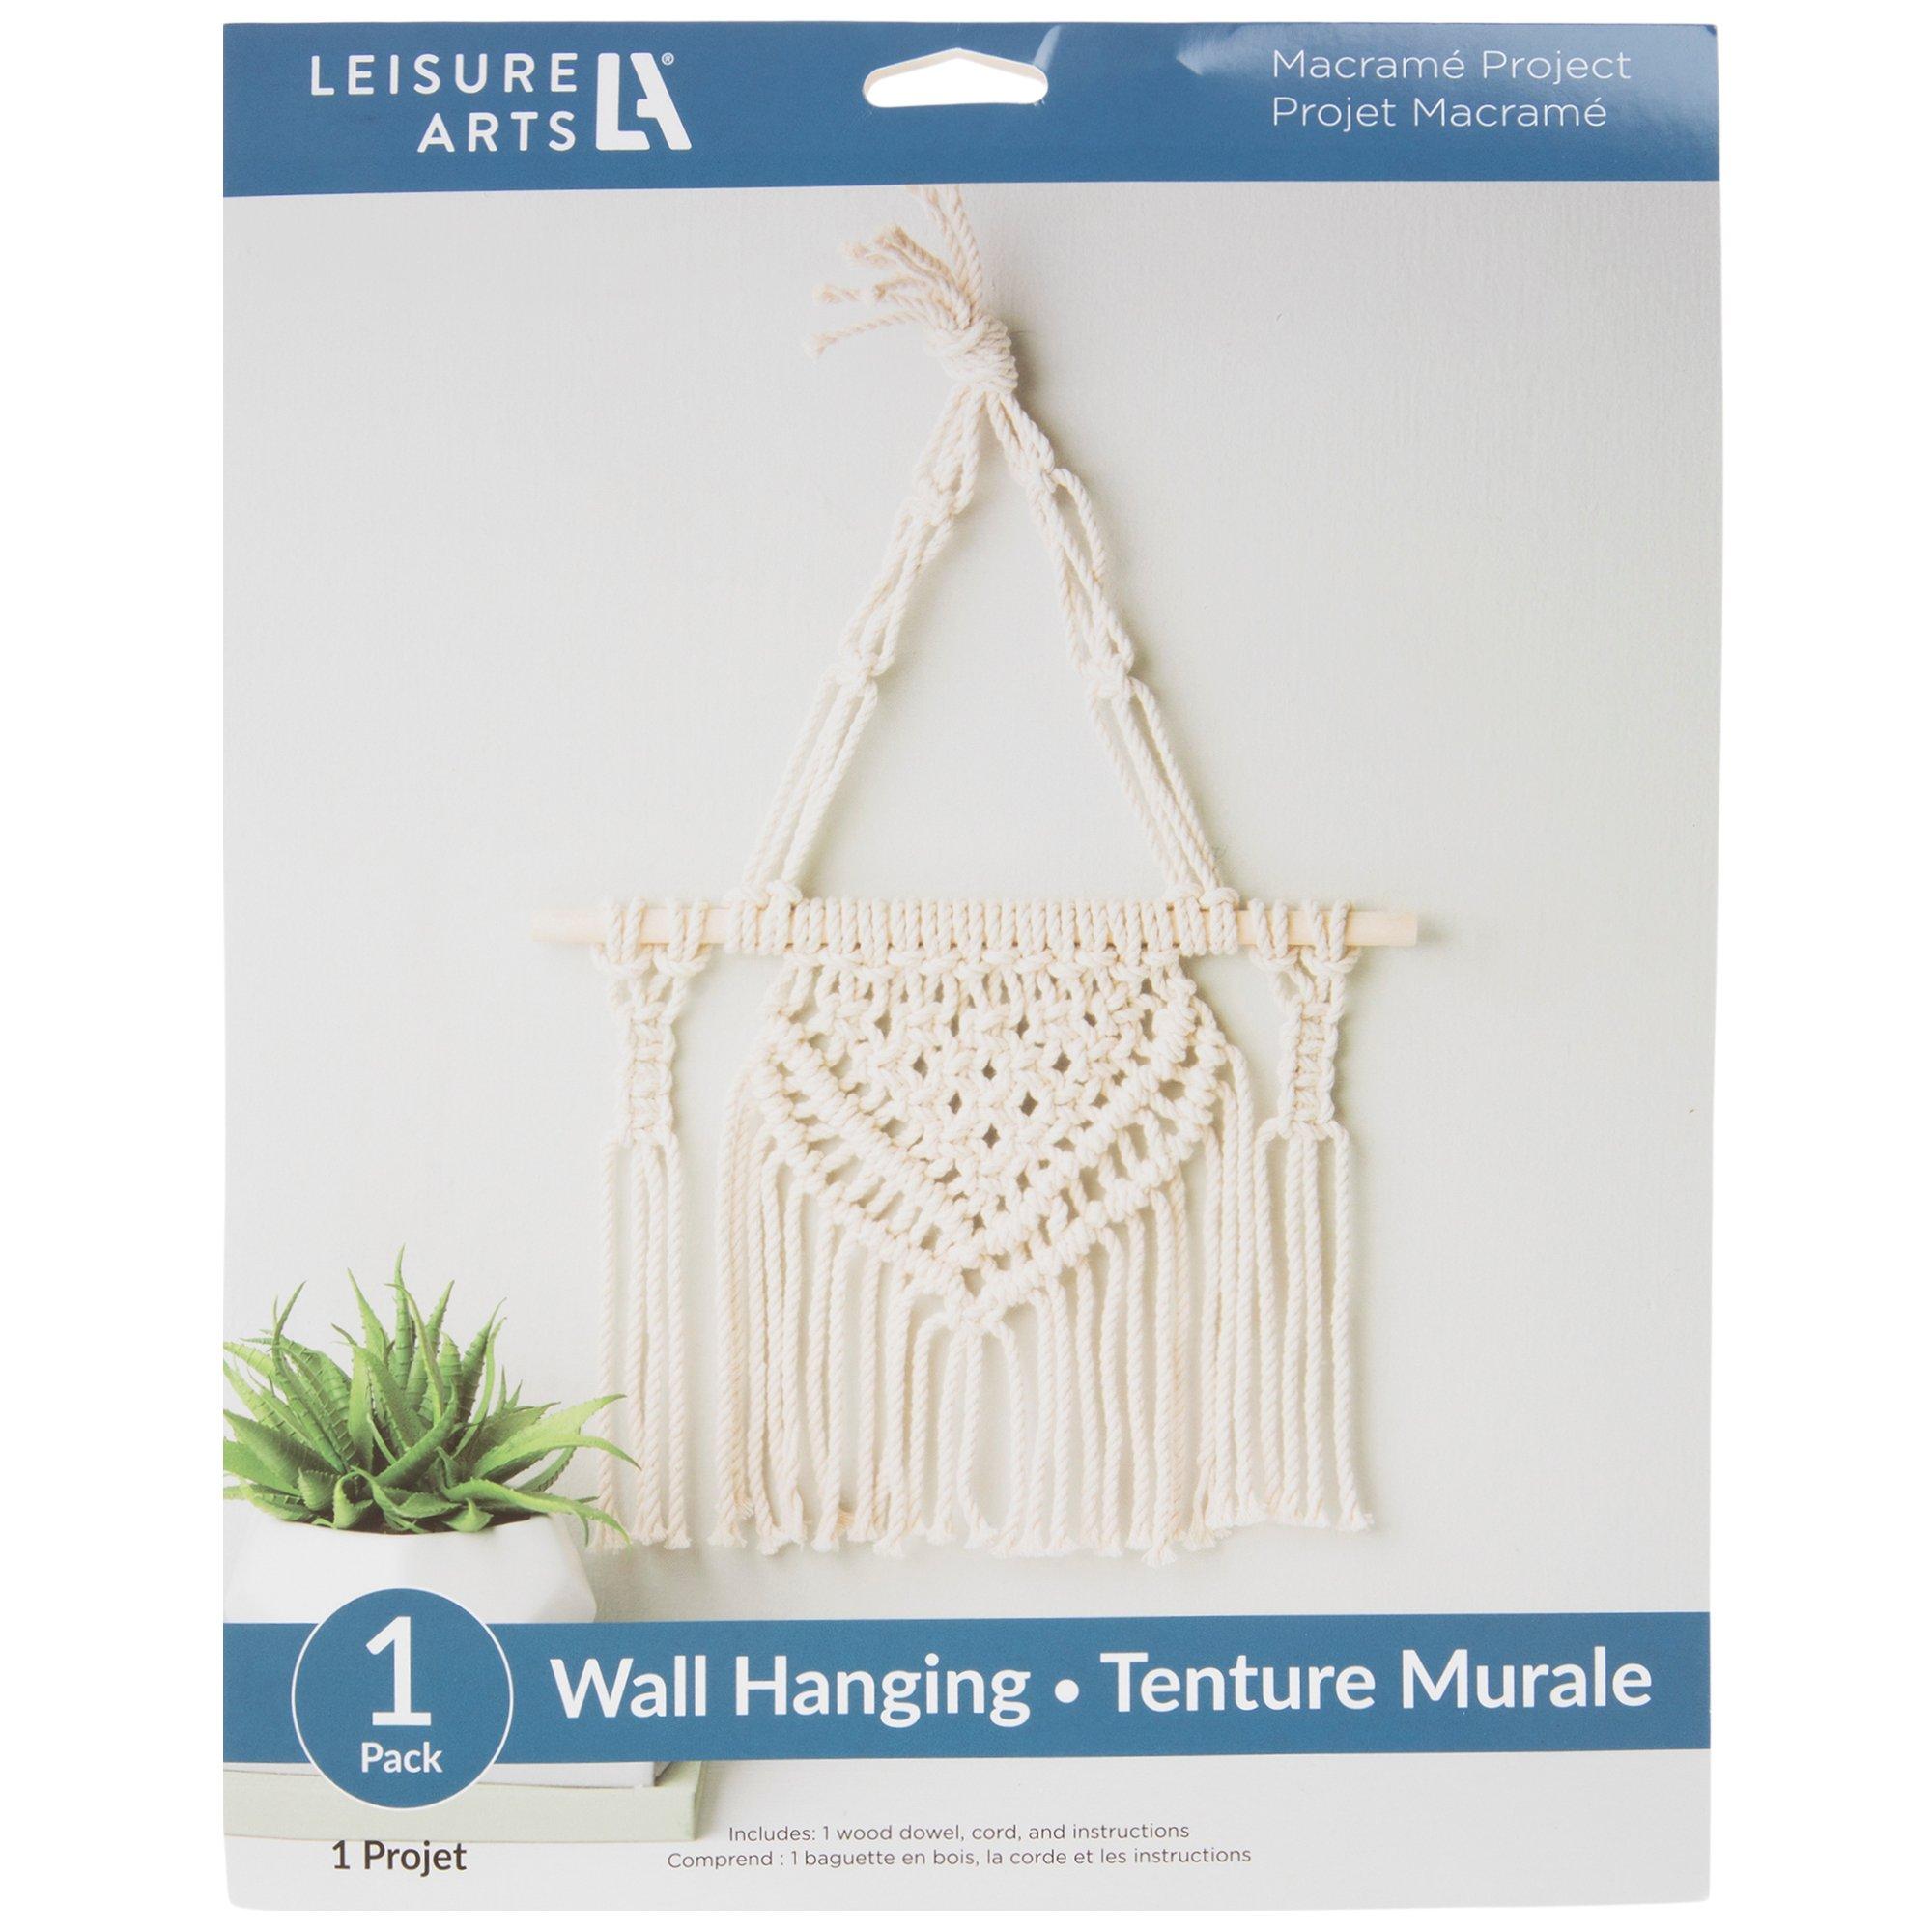 Leisure Arts Macrame Kit Arrow Plant Hanging, Macrame Kits for